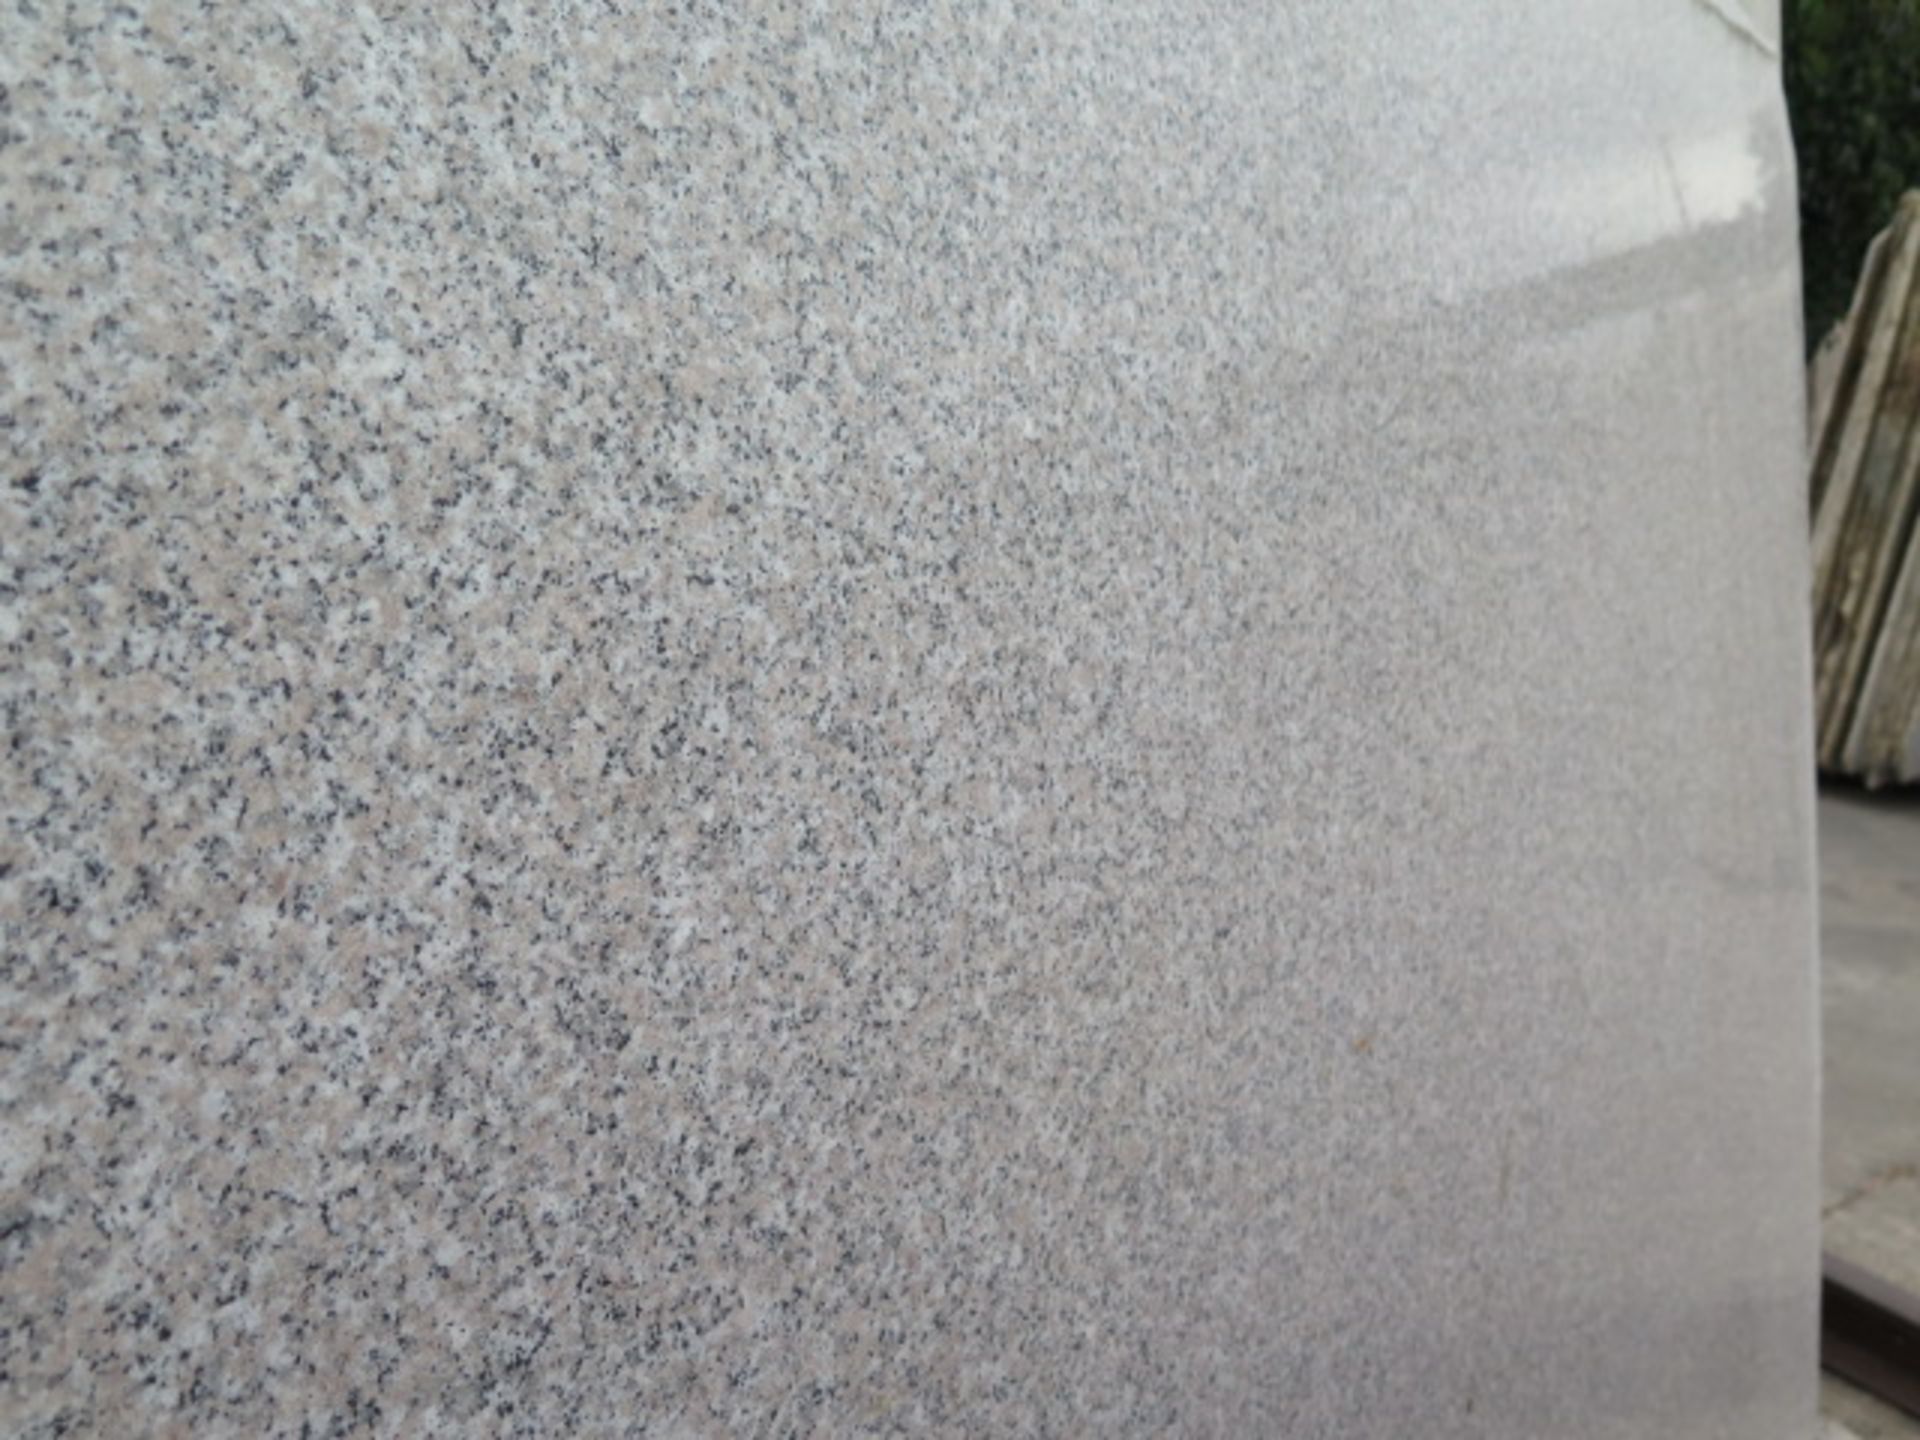 Luna Pearl Granite (6 Slabs) (SOLD AS-IS - NO WARRANTY) - Image 6 of 6